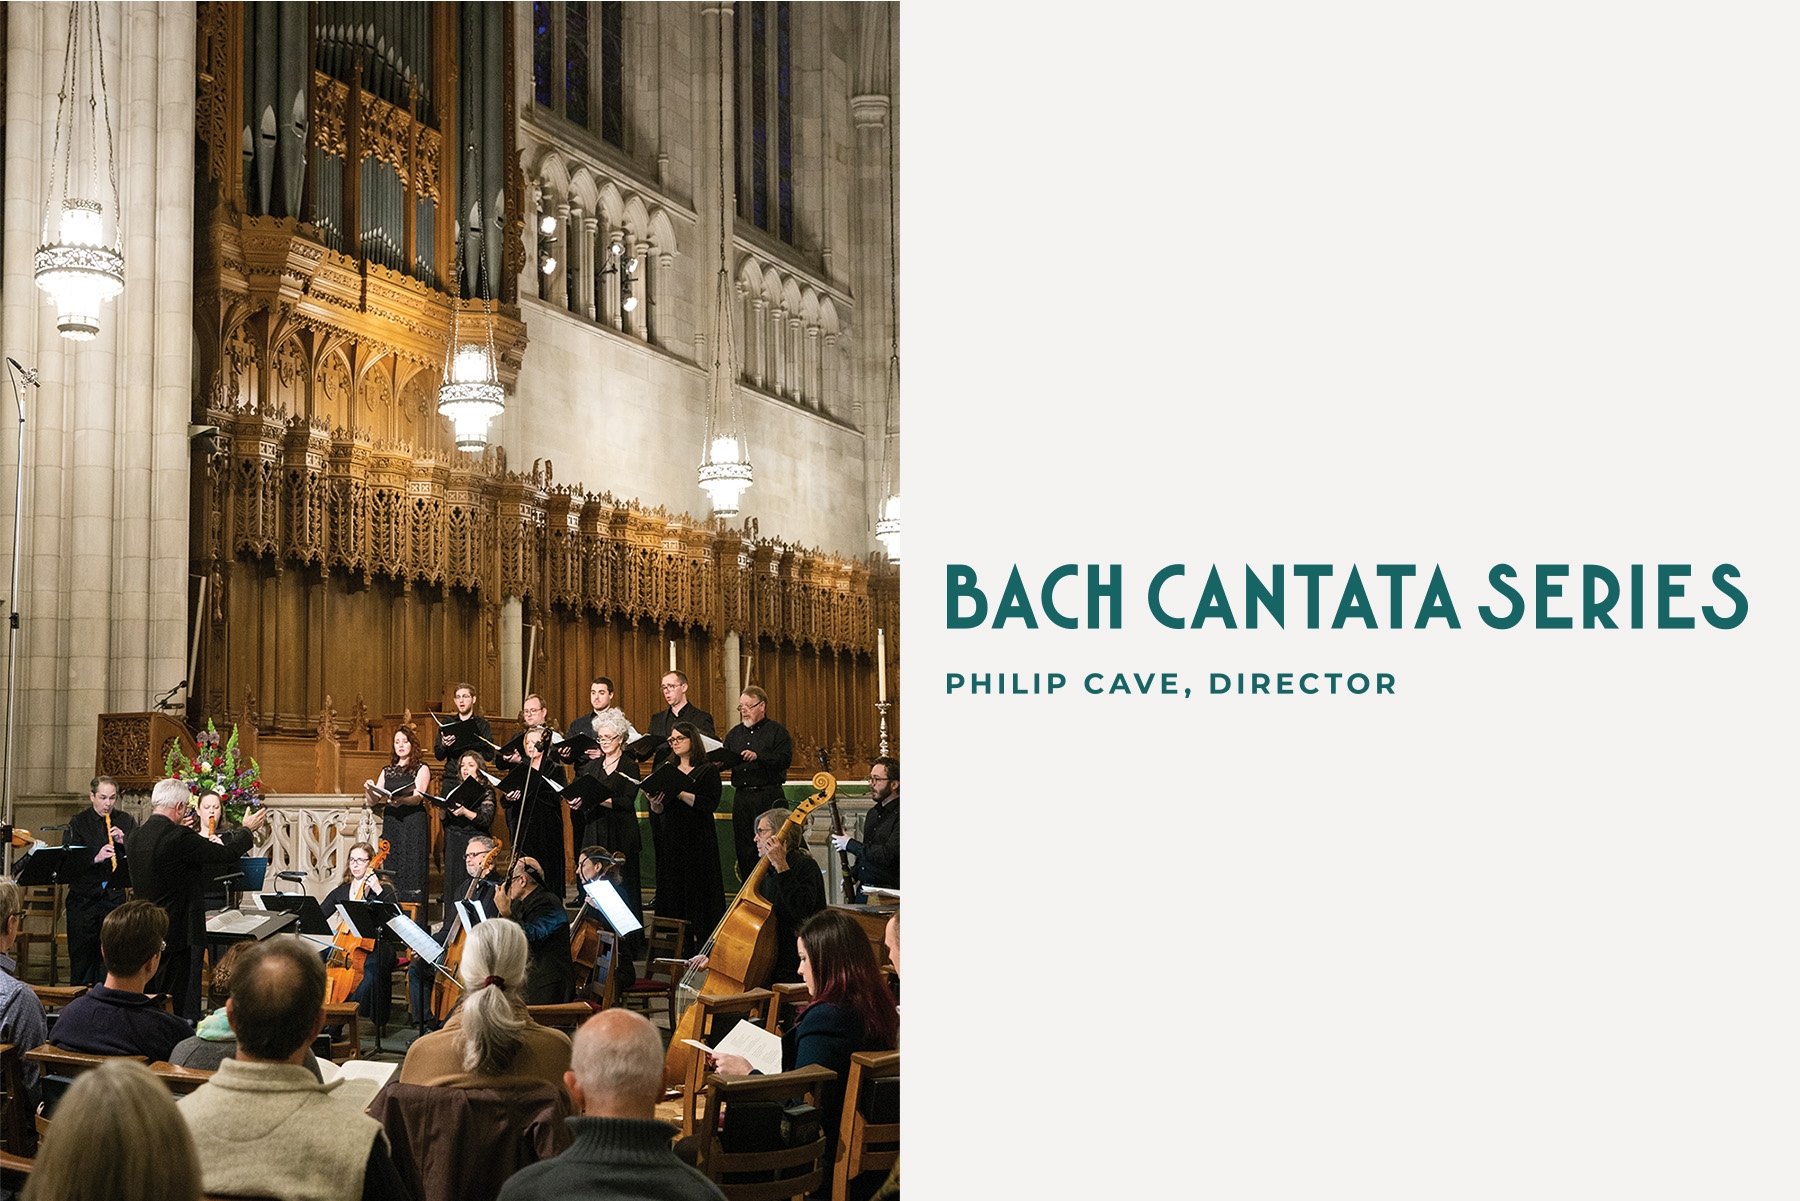 Bach Cantata Concert